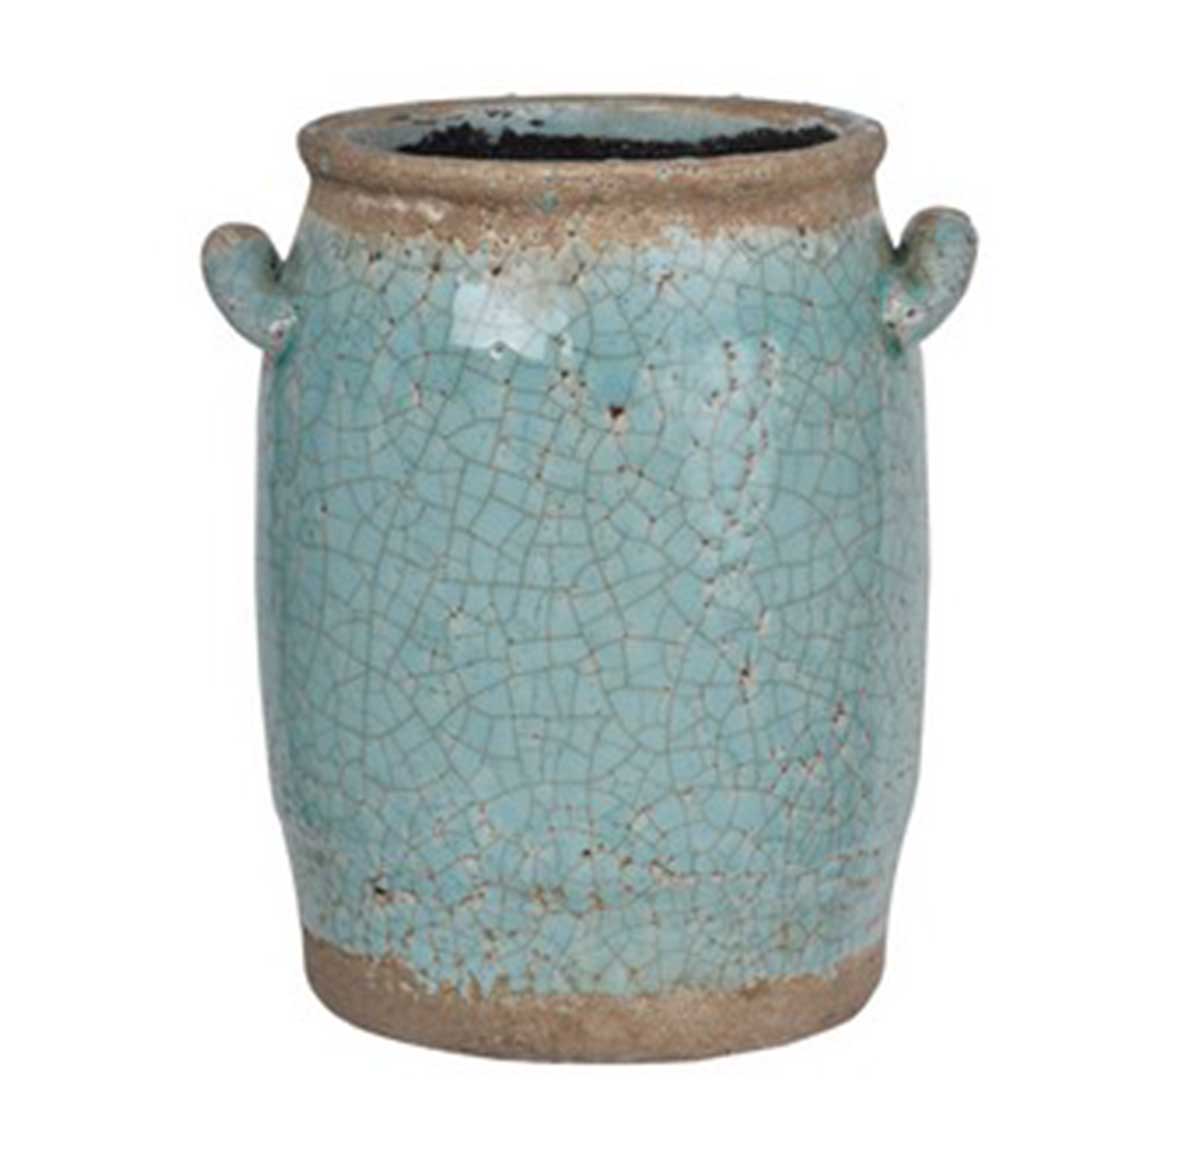 The Candia Caramic Vase - Turquoise | Vases | Home Decor